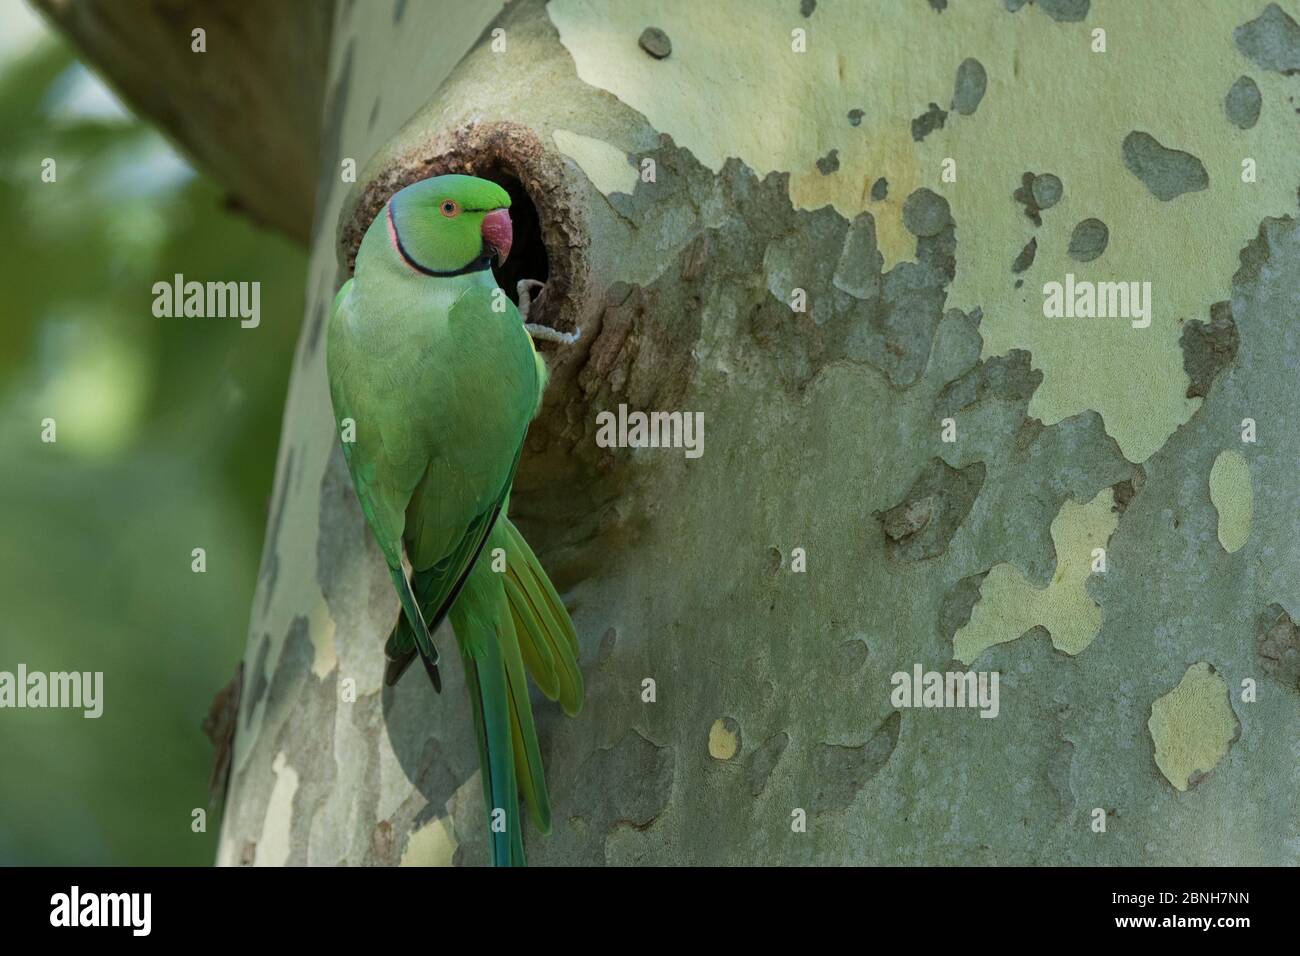 Rose-ringed Parakeet  (Psittacula krameri) introduced species, at nest in tree, Paris region, France, August Stock Photo